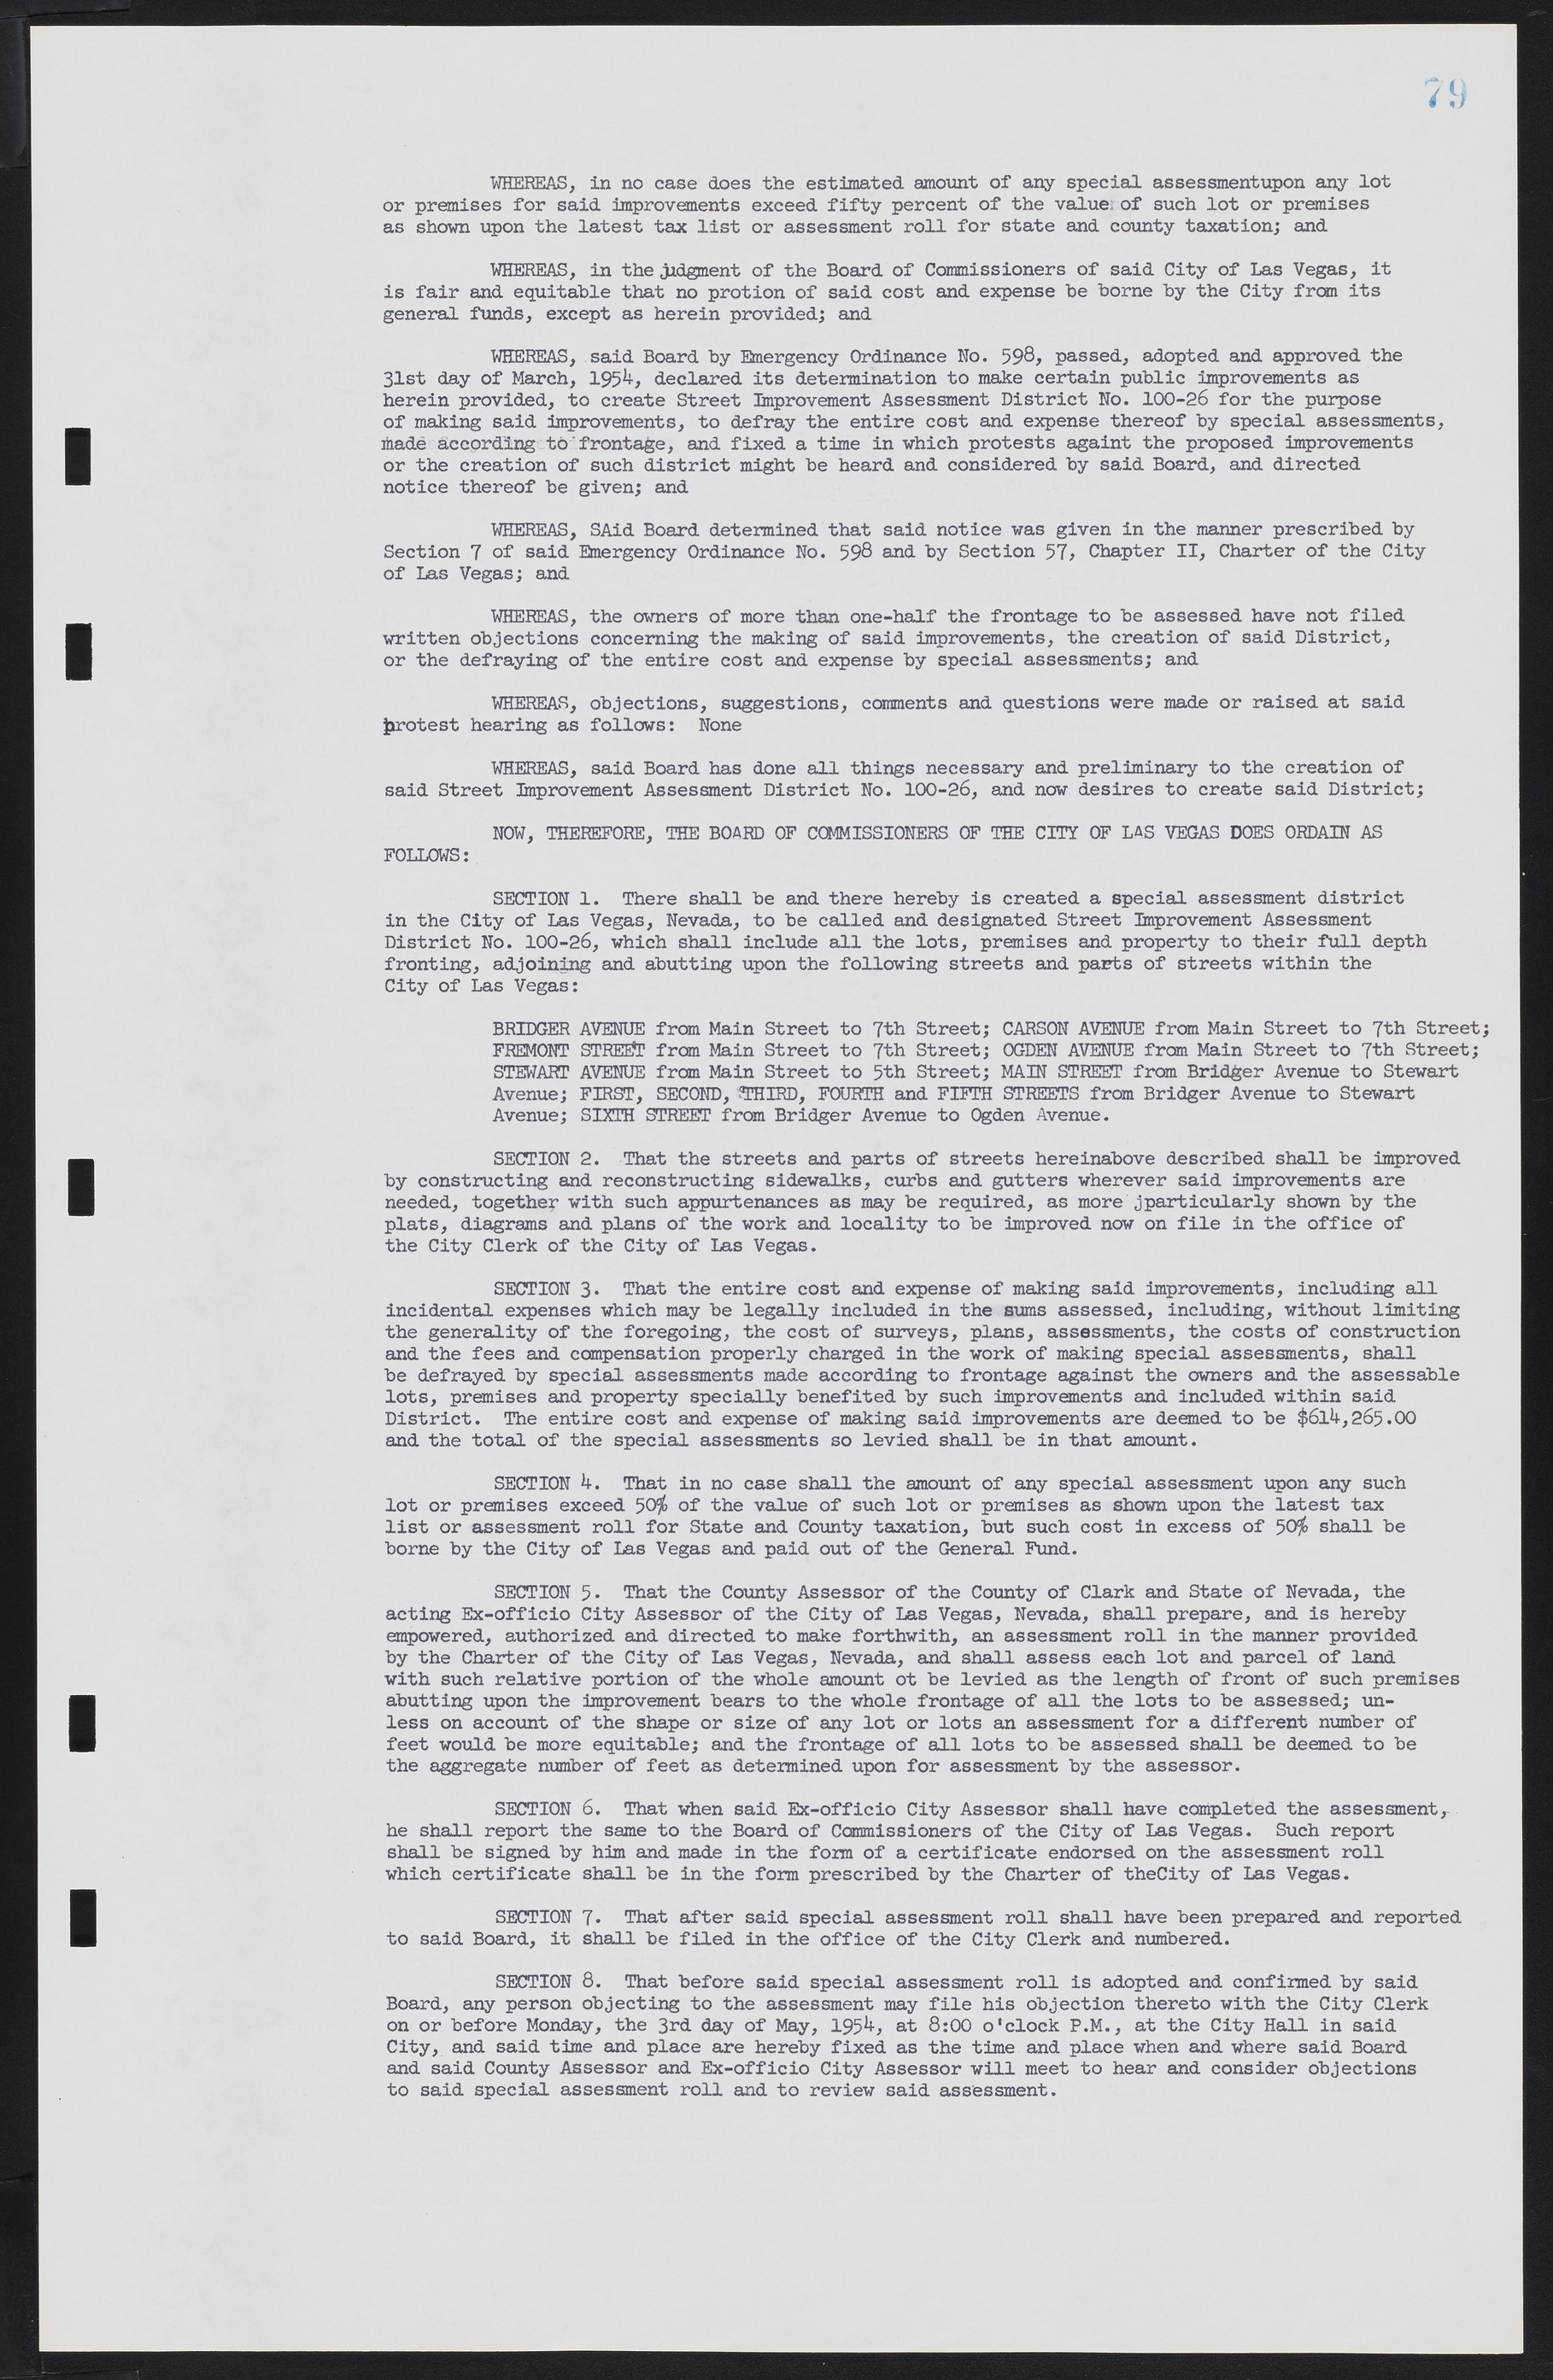 Las Vegas City Commission Minutes, February 17, 1954 to September 21, 1955, lvc000009-83